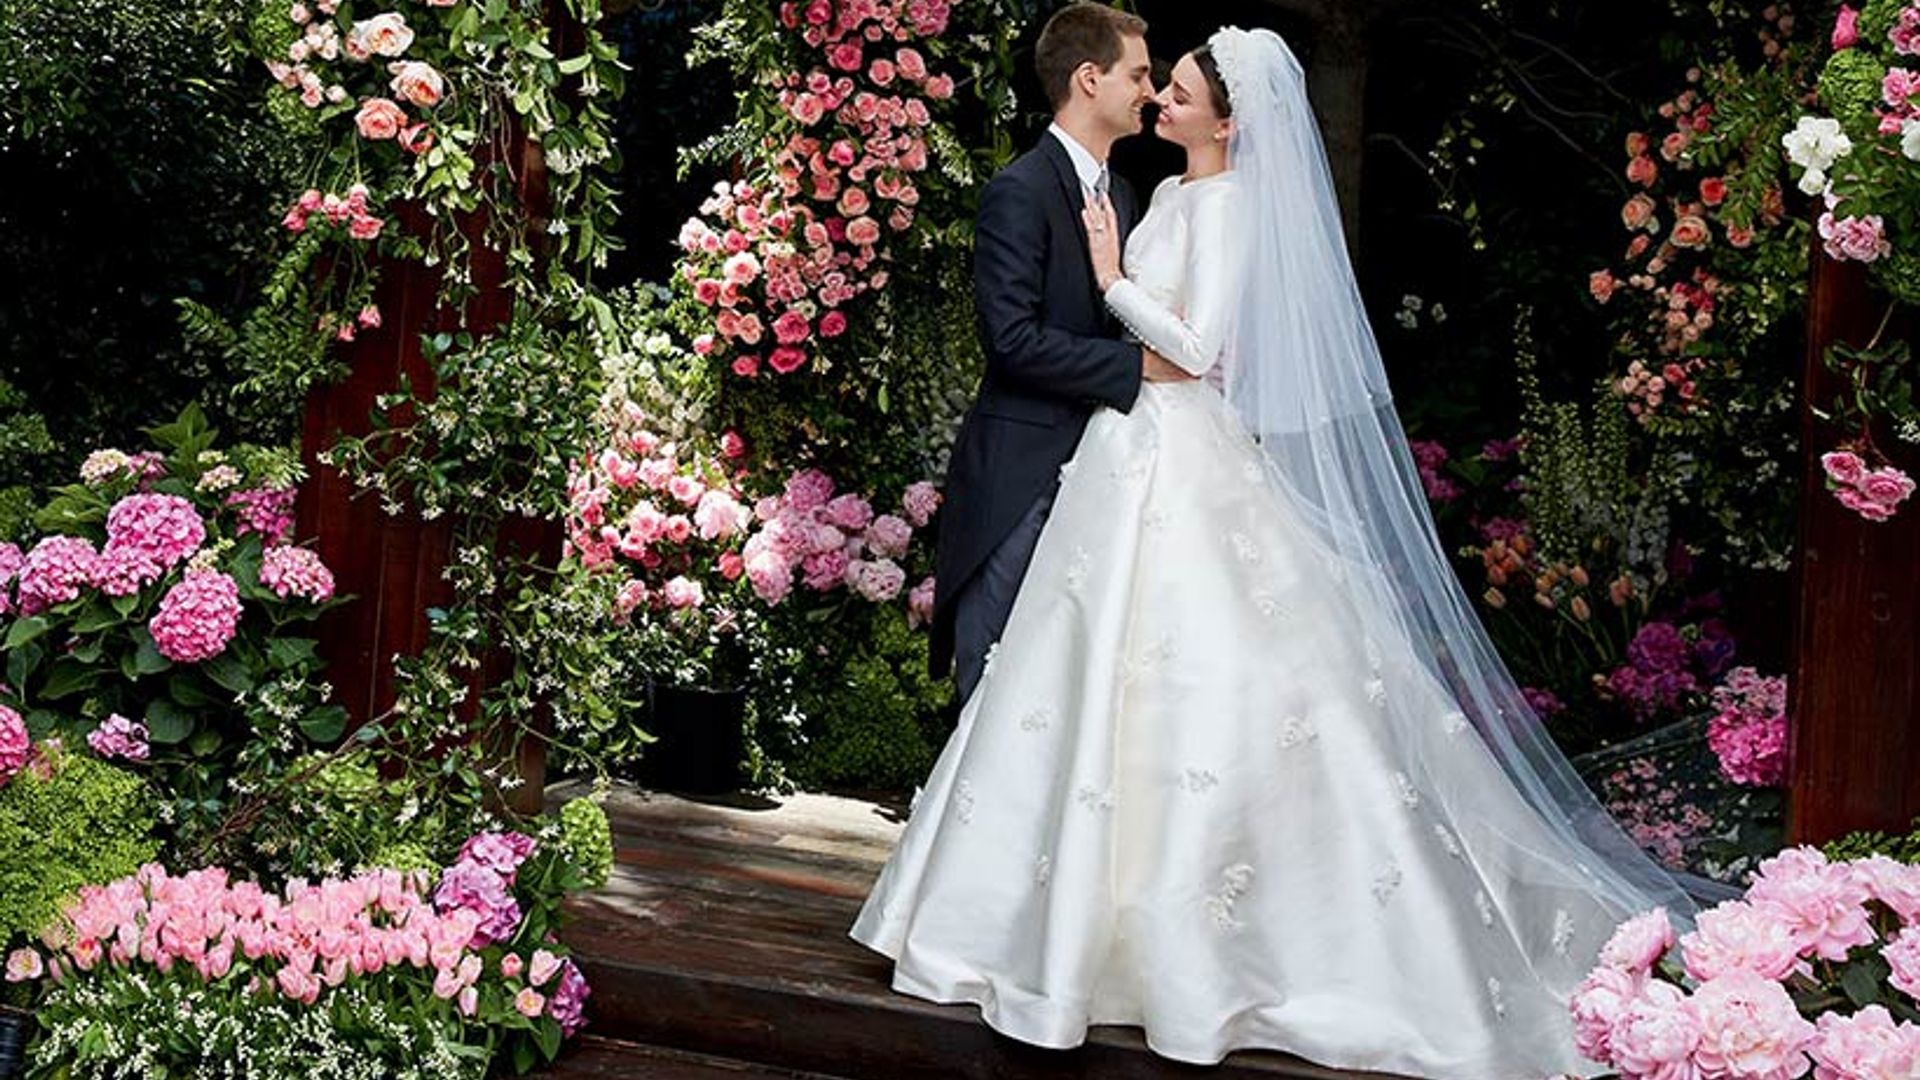 Miranda Kerr shares first photos from wedding to Evan Spiegel